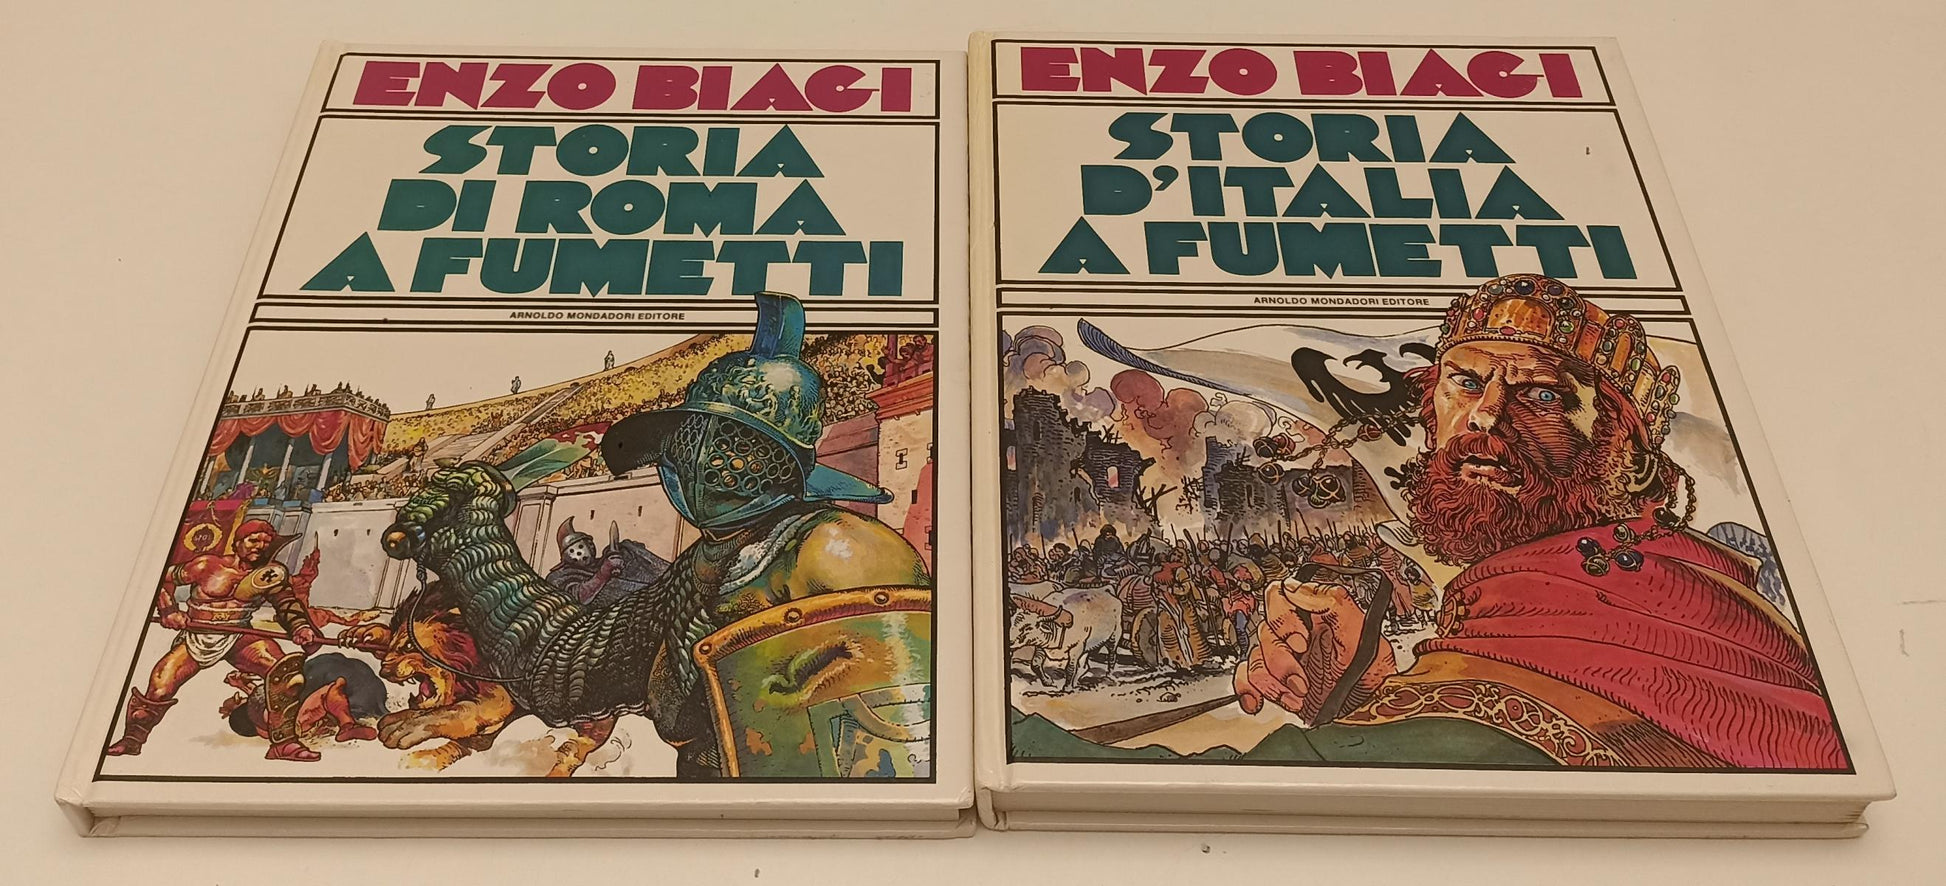 FV- STORIA DI ROMA A FUMETTI - ENZO BIAGI - MONDADORI - 1986 - C - D24